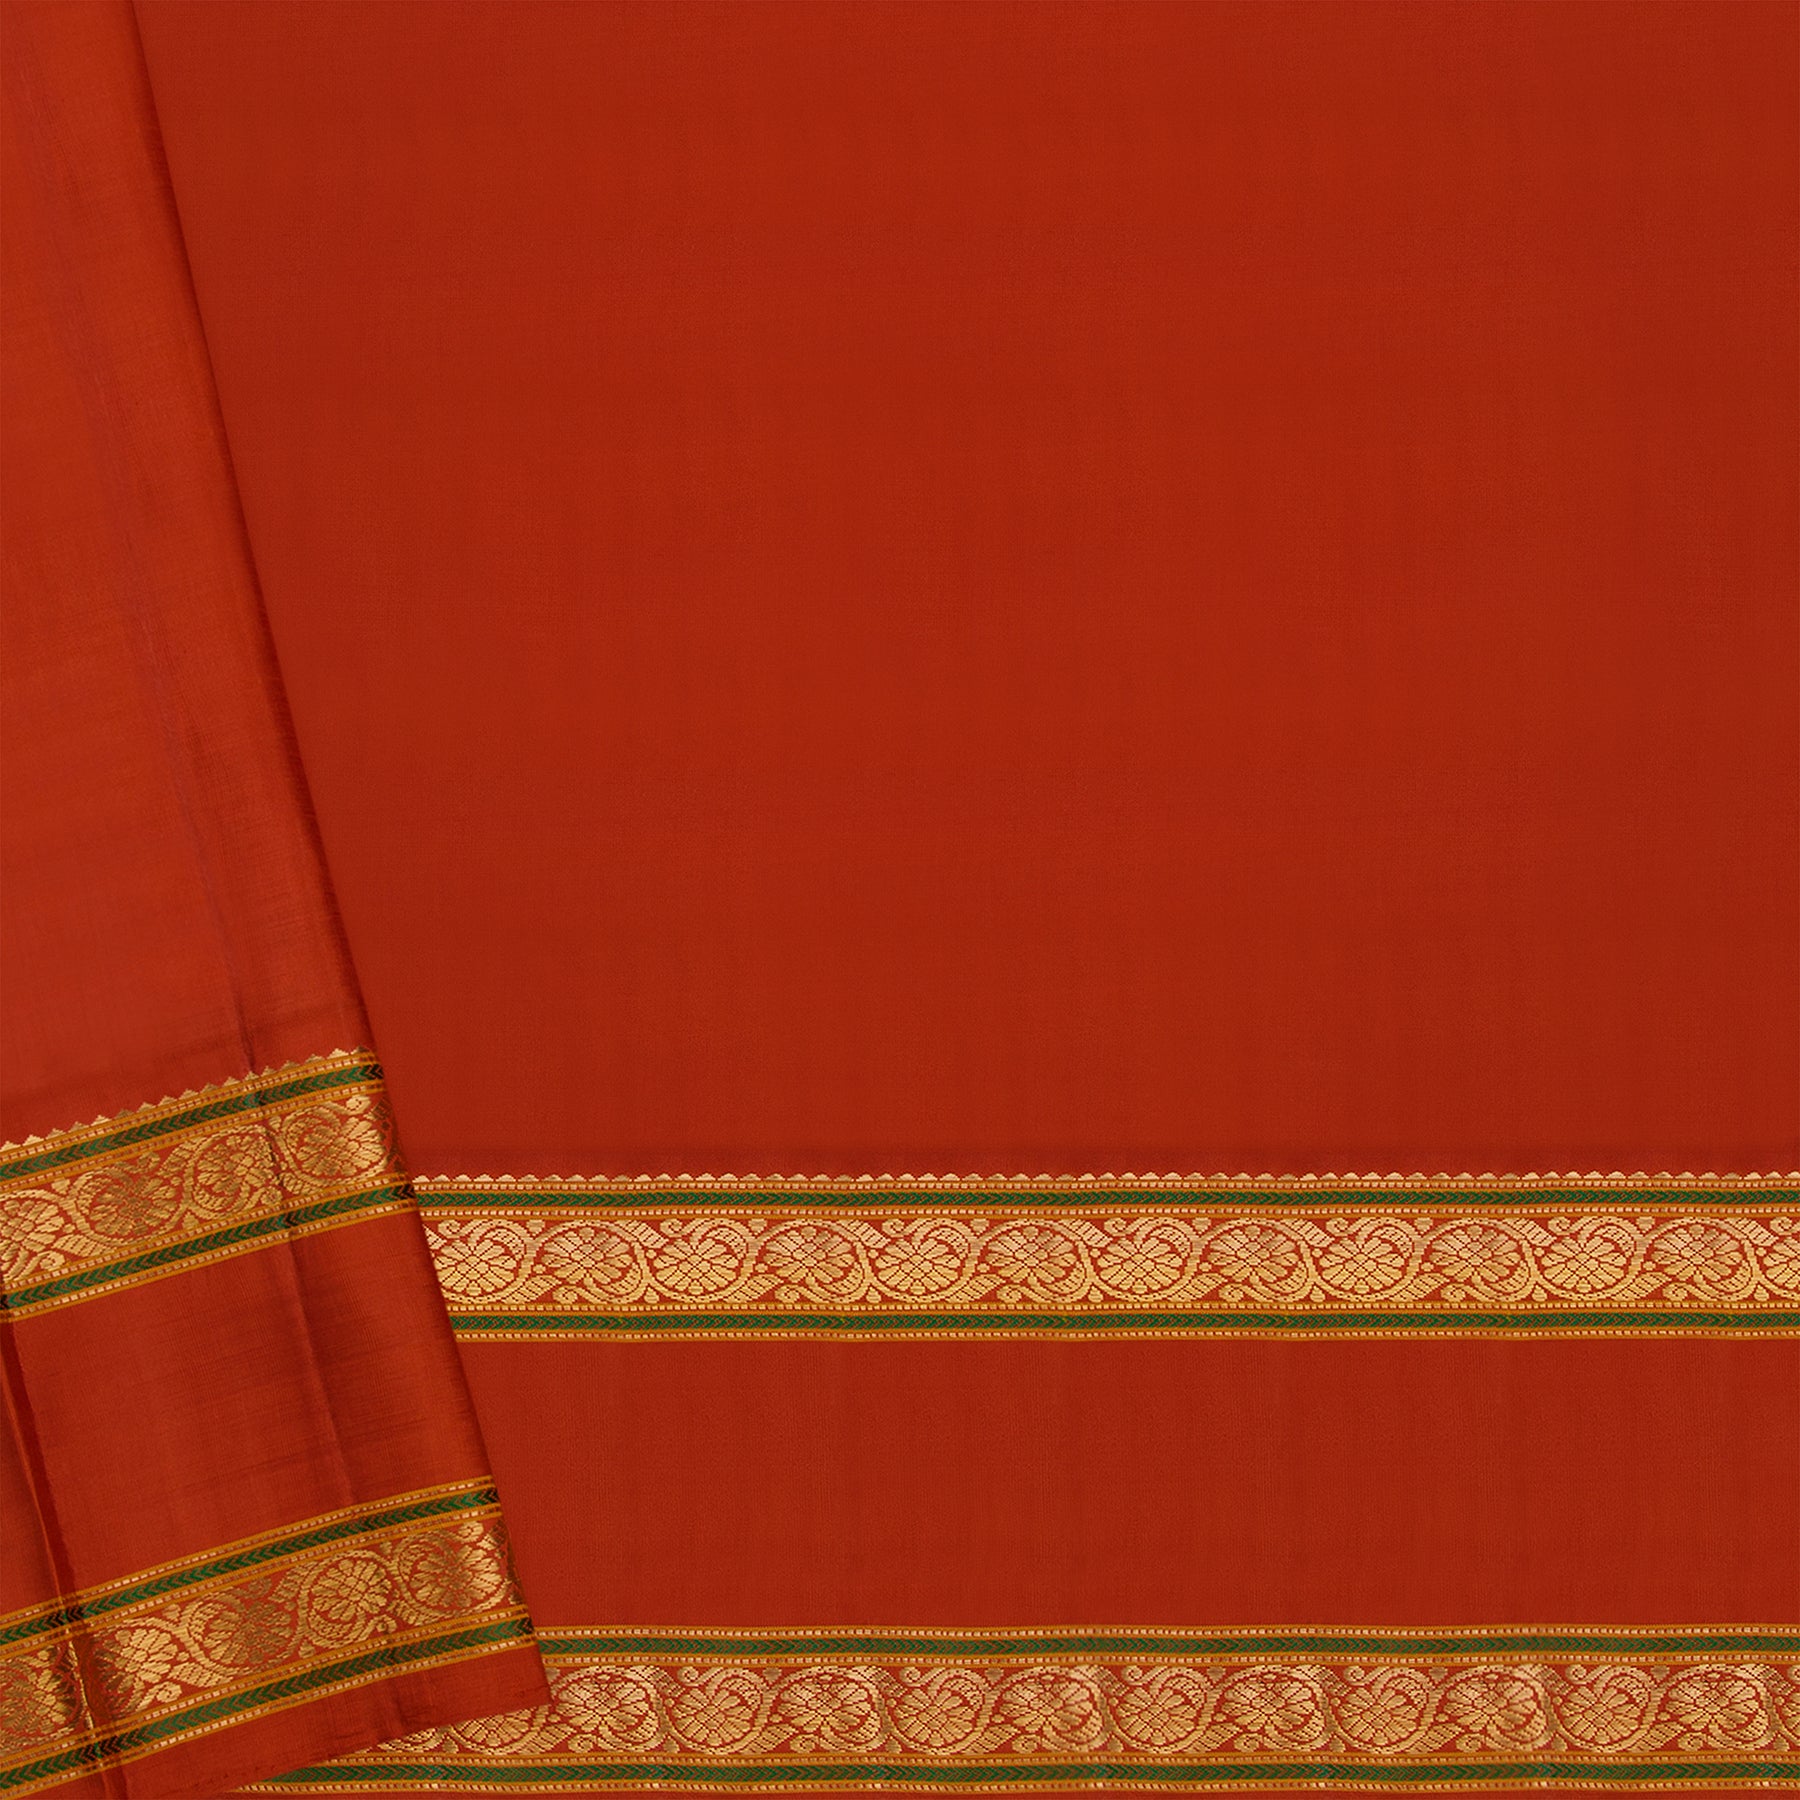 Kanakavalli Kanjivaram Silk Sari 23-040-HS001-01899 - Blouse View